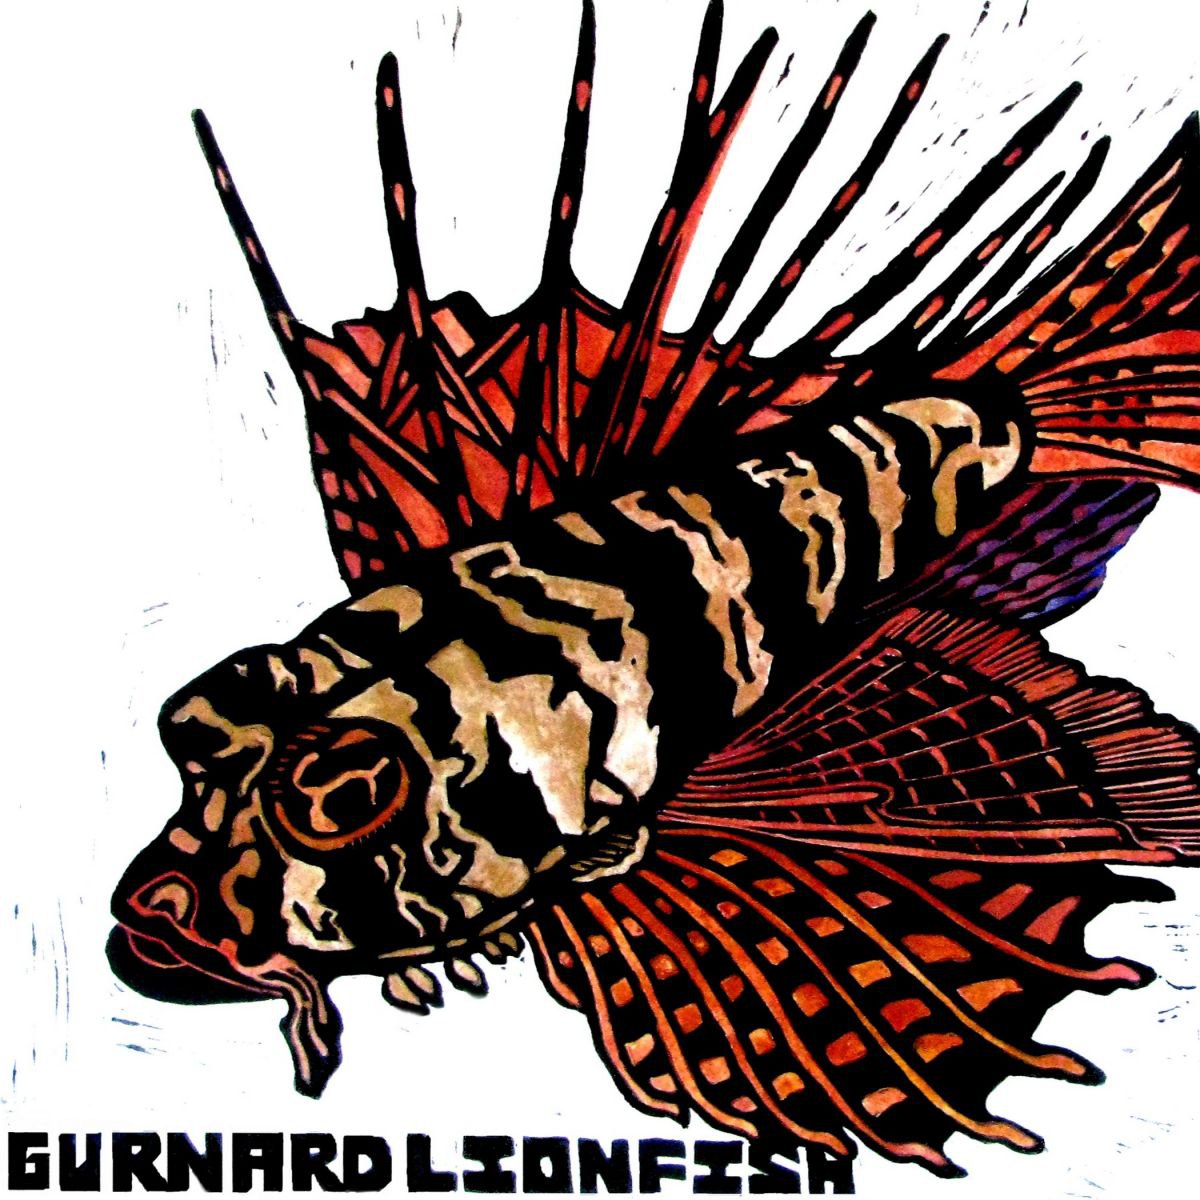 G is for GURNARD LIONFISH by Laurel Macdonald